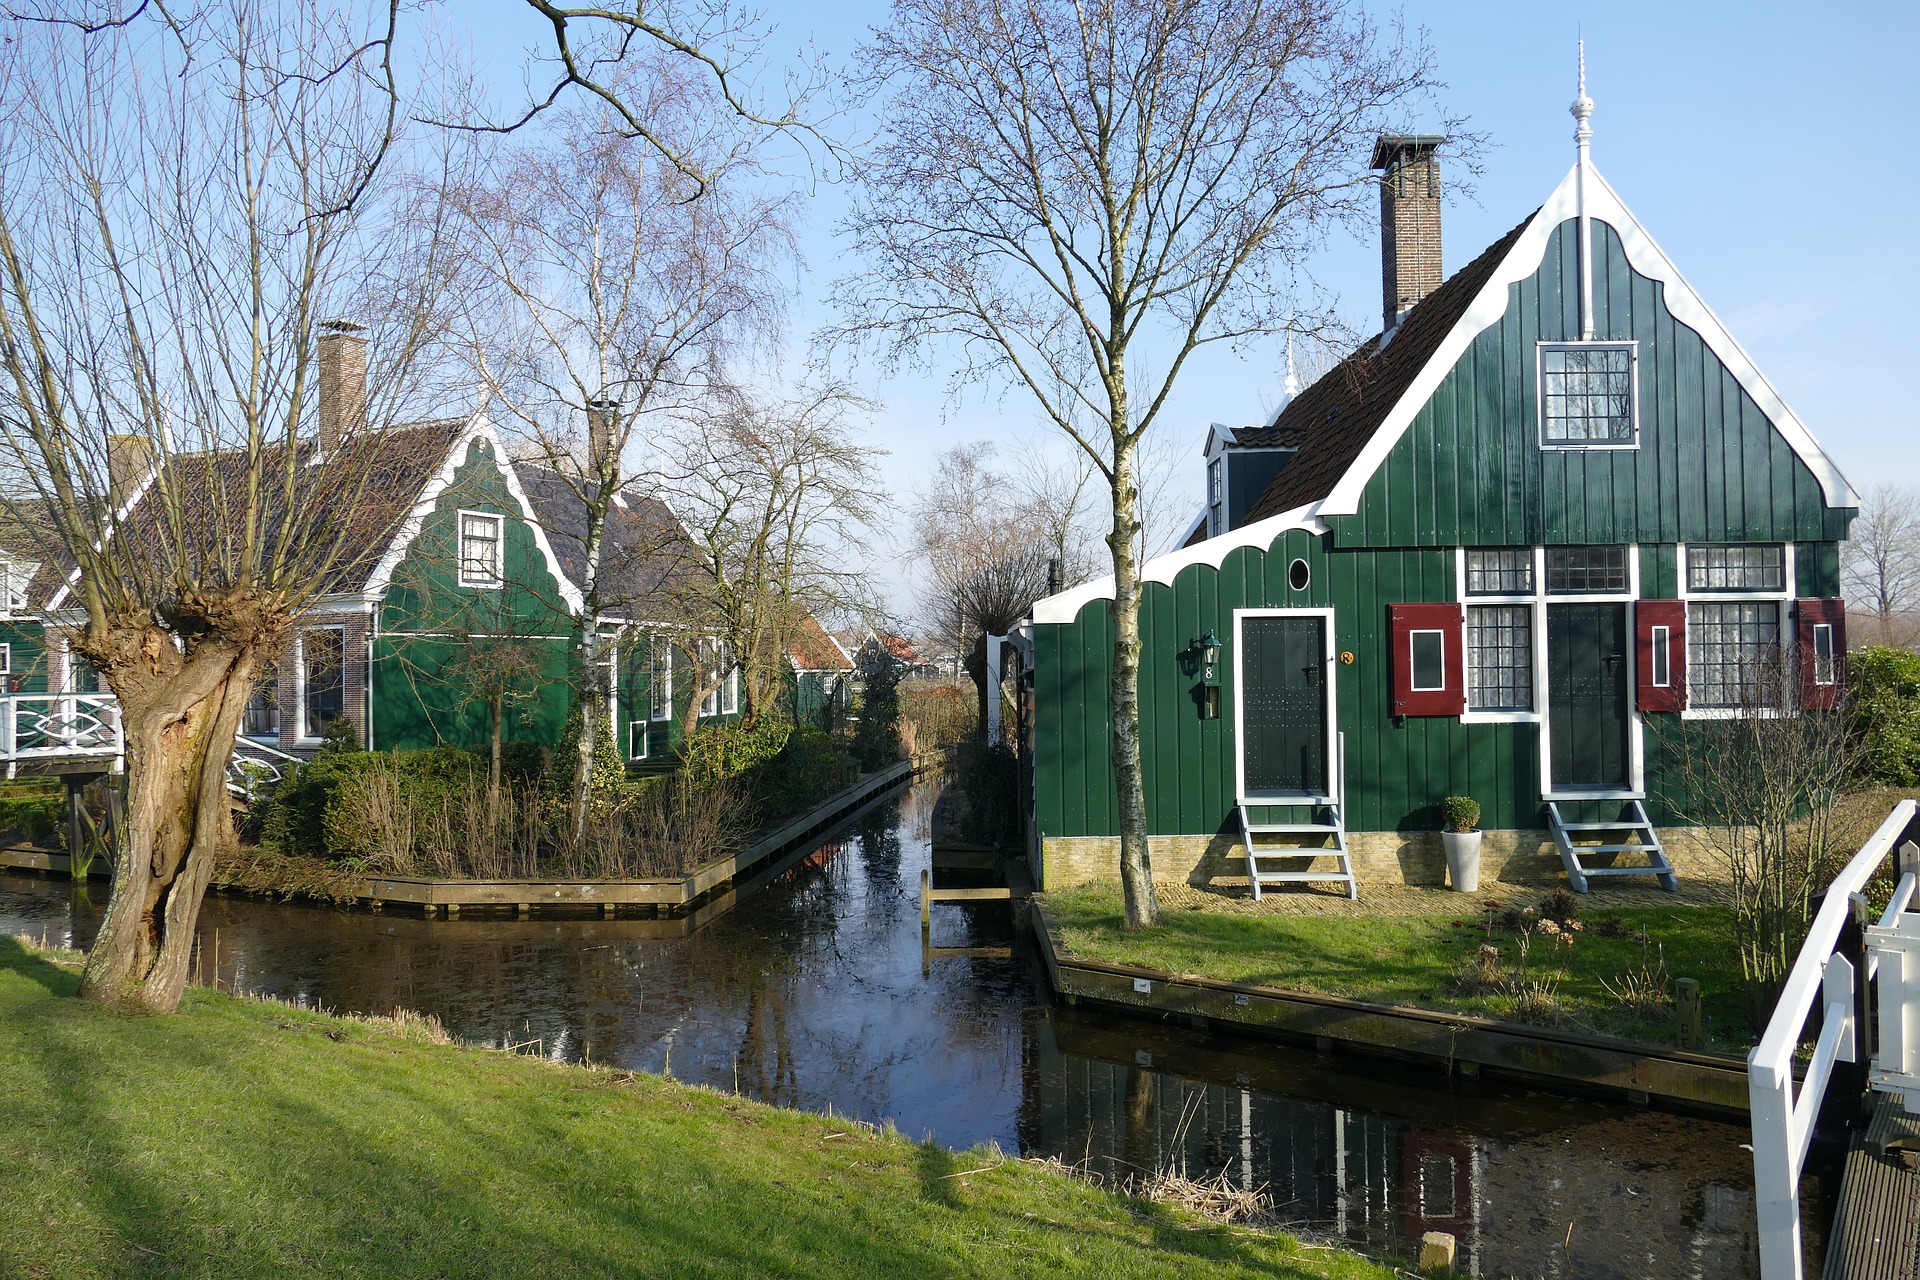 Visit the Zaanse Schans by ship from Amsterdam - Amsterdam - 